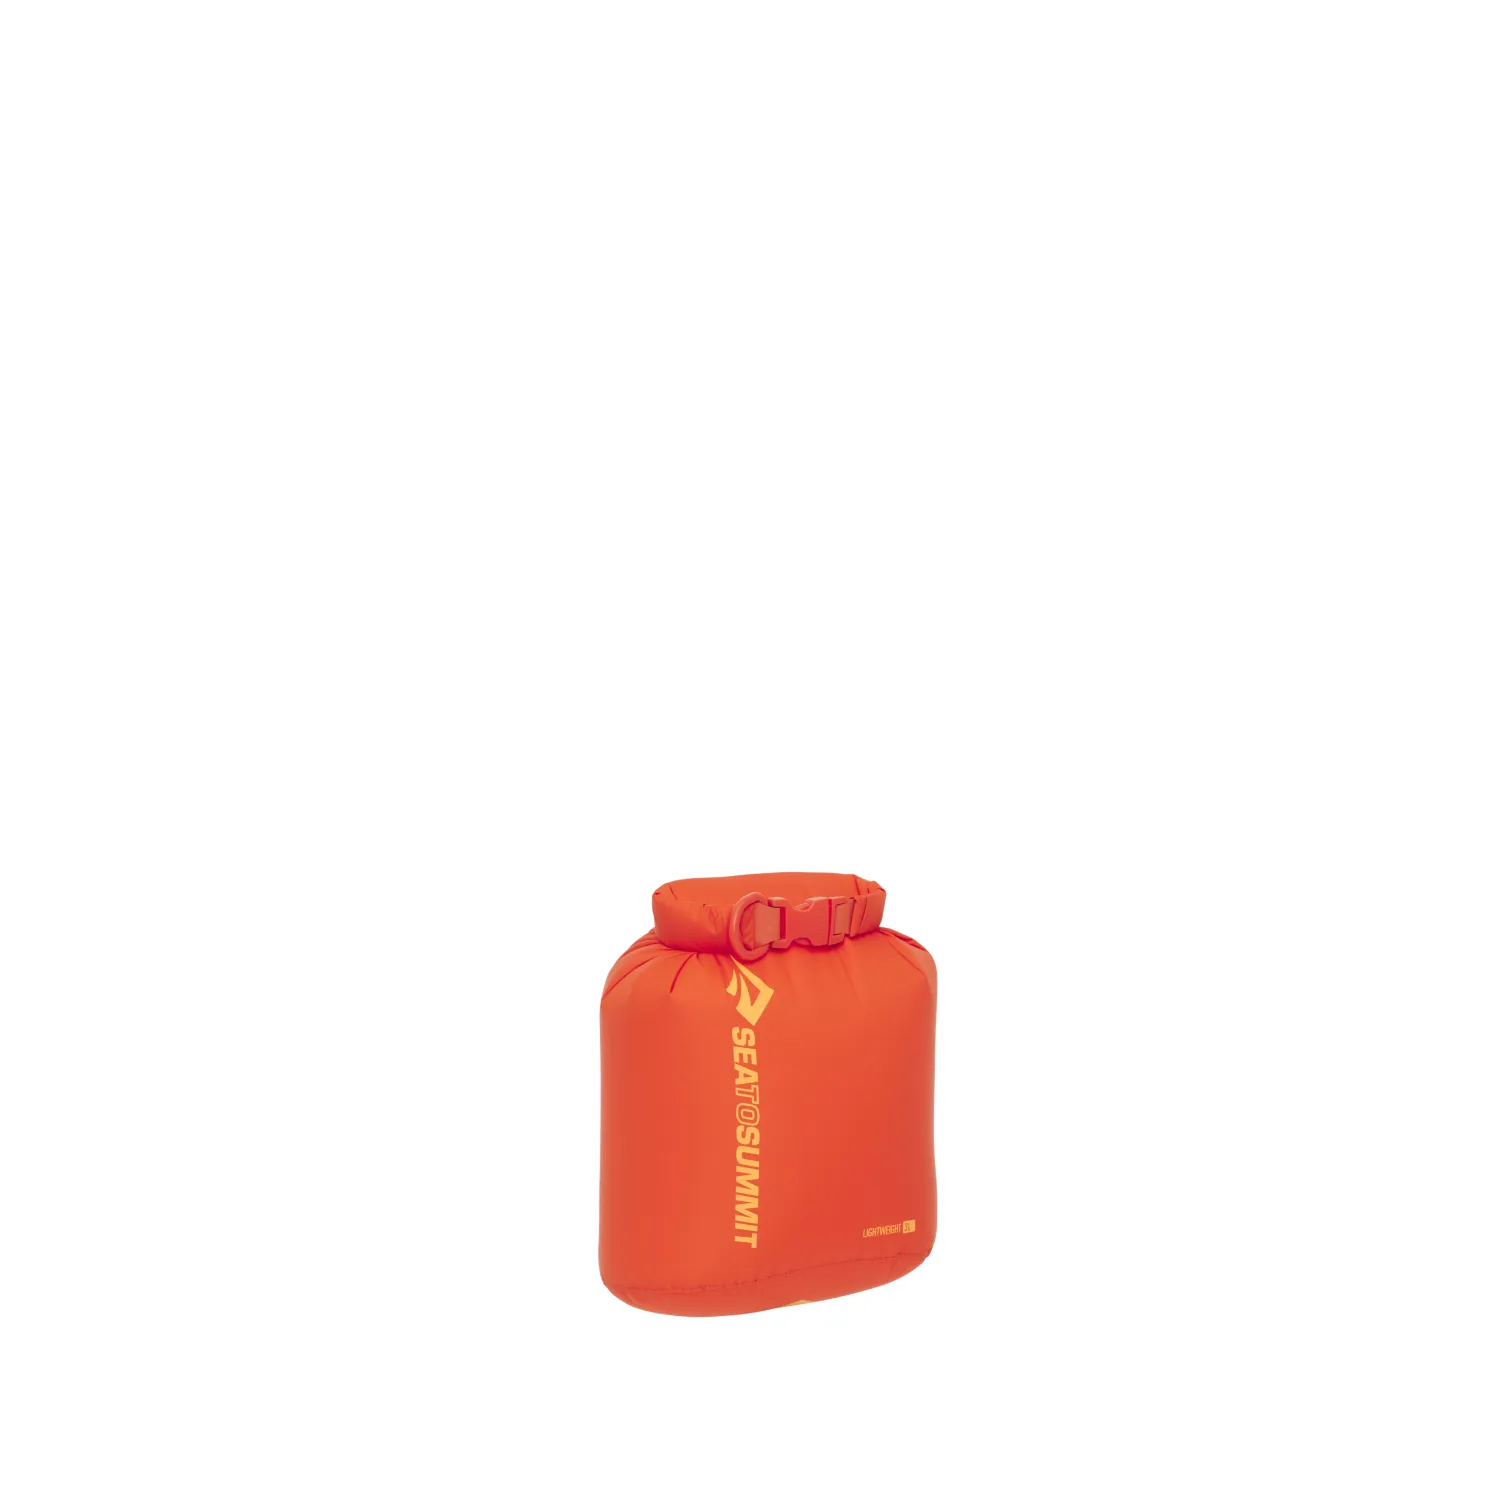 01_ASG012011-020808 Lightweight Dry Bag 3L Spicy Orange.jpg